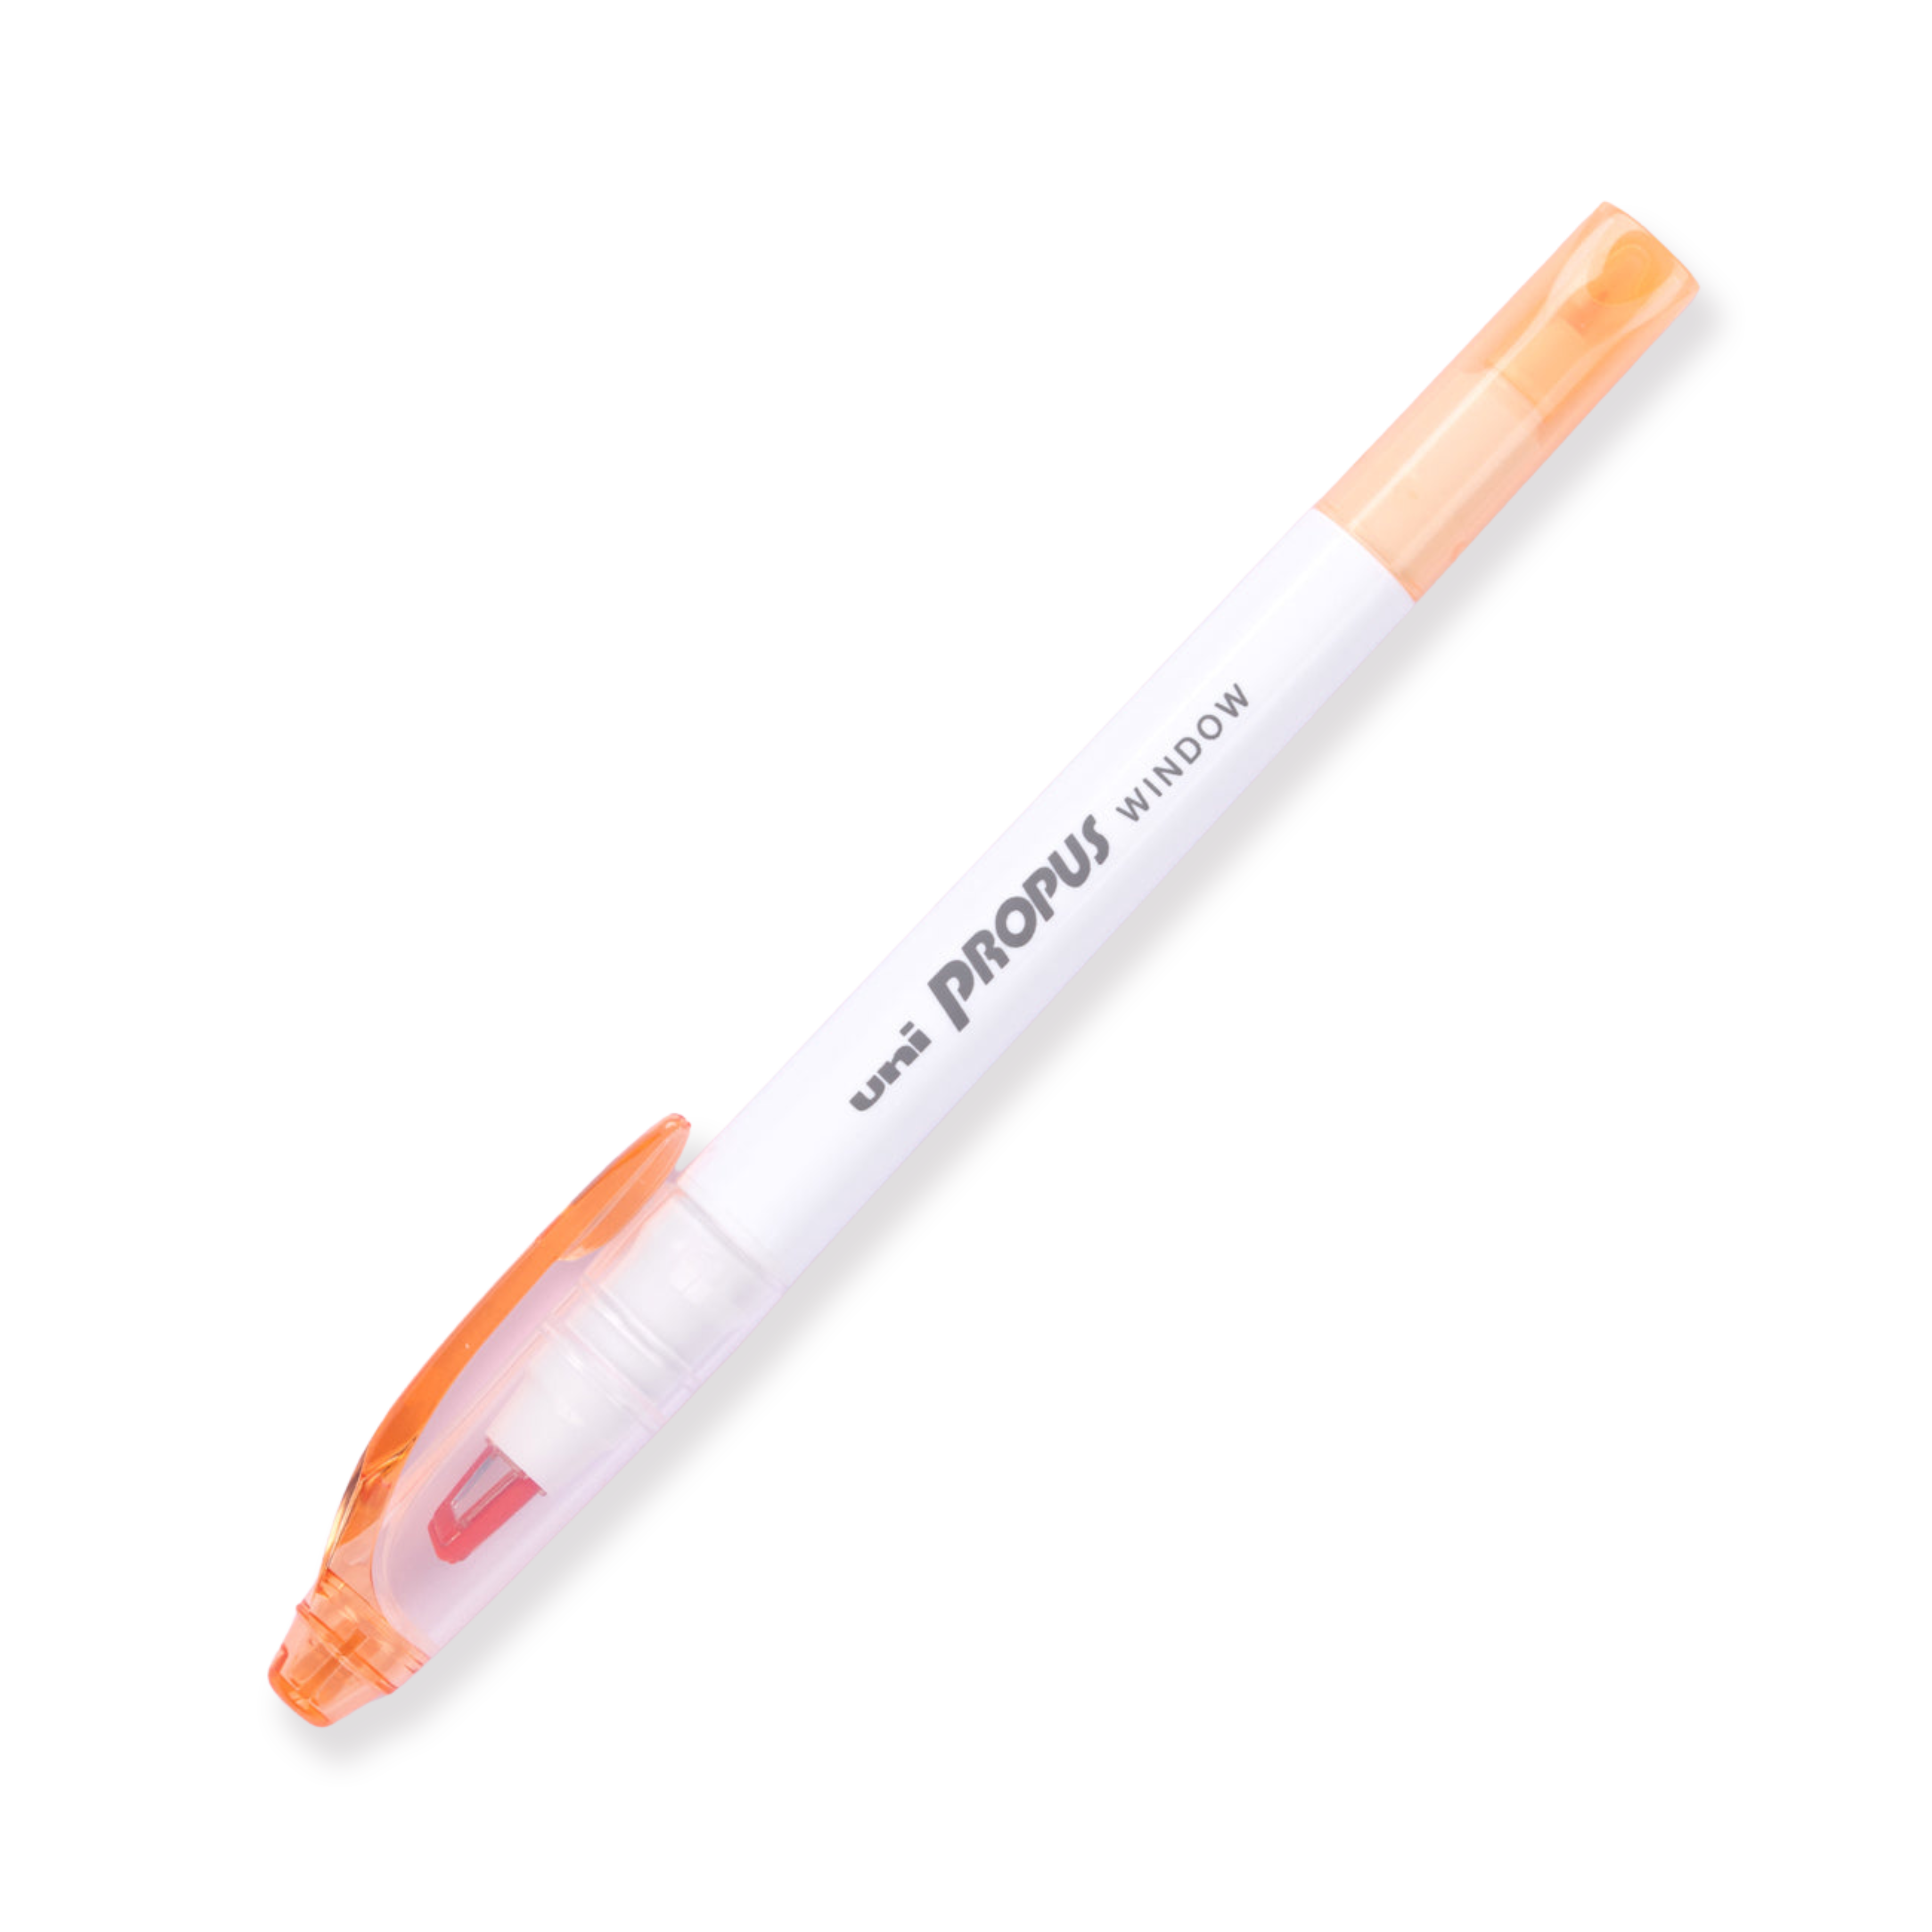 Uni Propus Window Double-Sided Highlighter - Smoke Orange - 2020 New Color